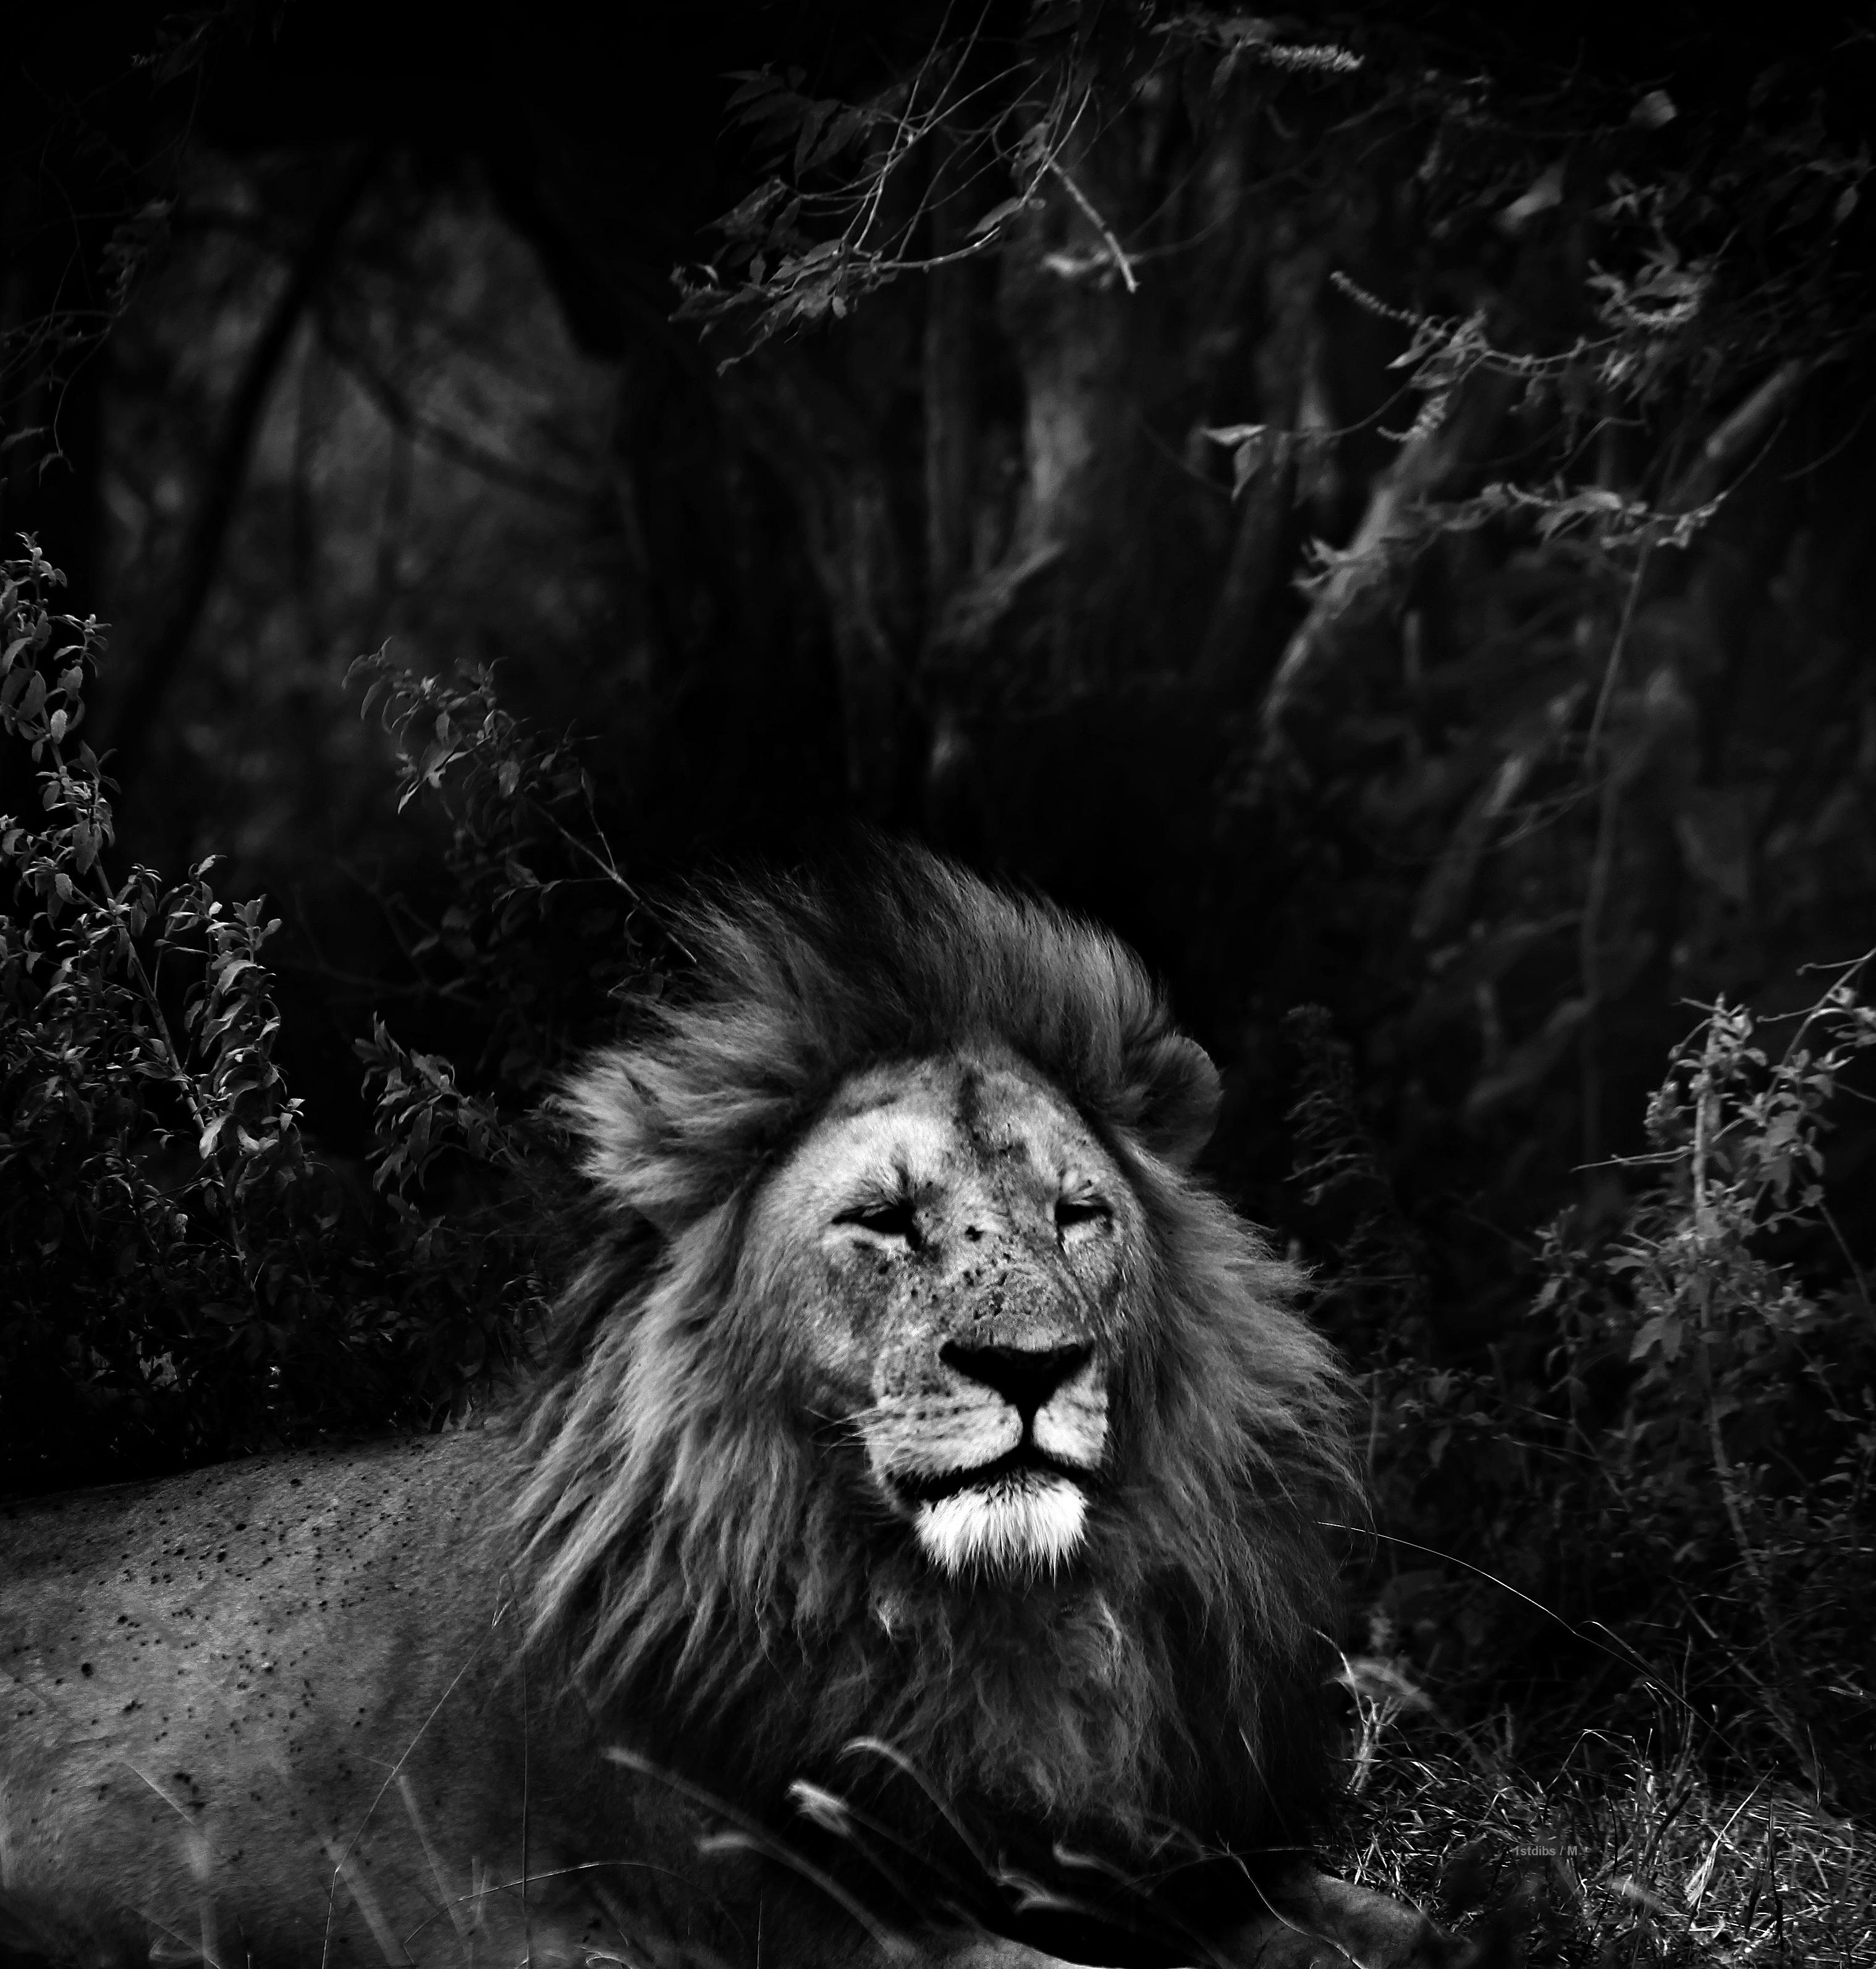 William Chua Abstract Photograph - Wildlife - "Lion" award winning photo 24 x 23 in. Fuji Flex premium 